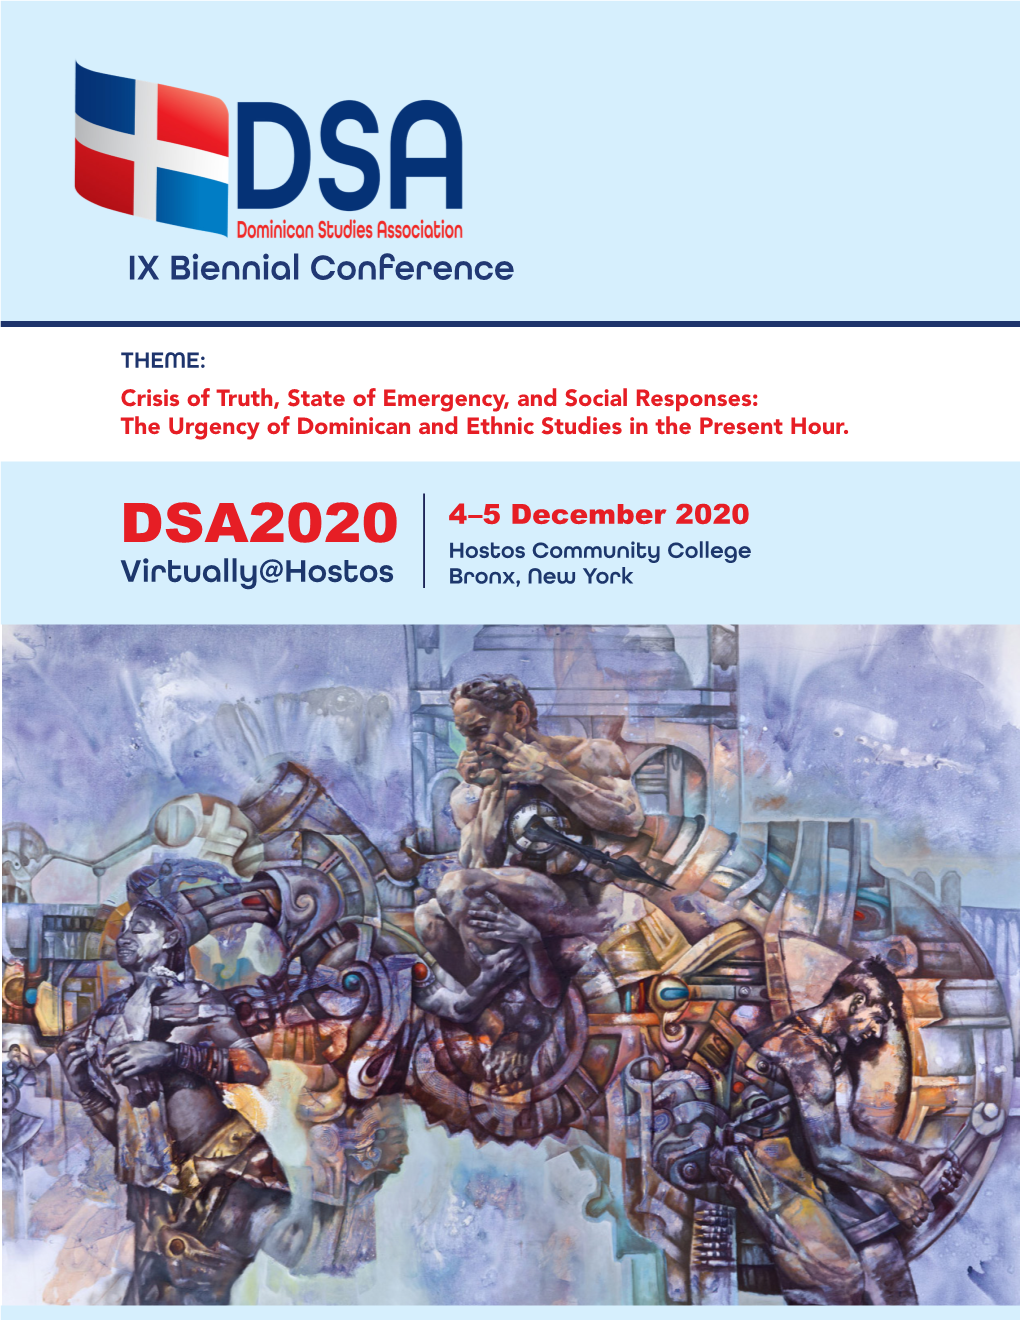 DSA2020 Virtually@Hostos: IX Biennial Dominican Studies